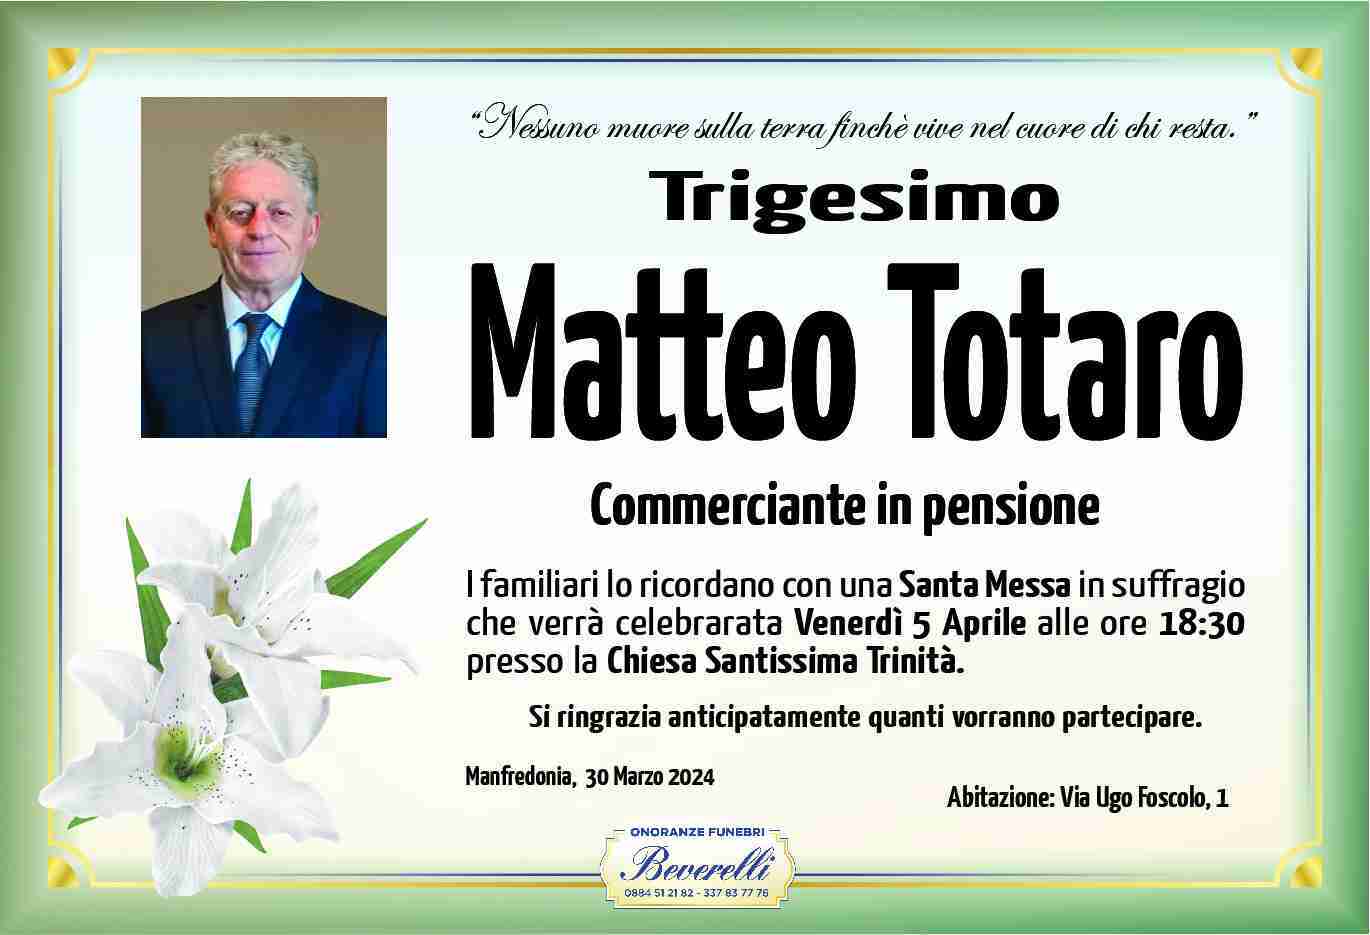 Matteo Totaro